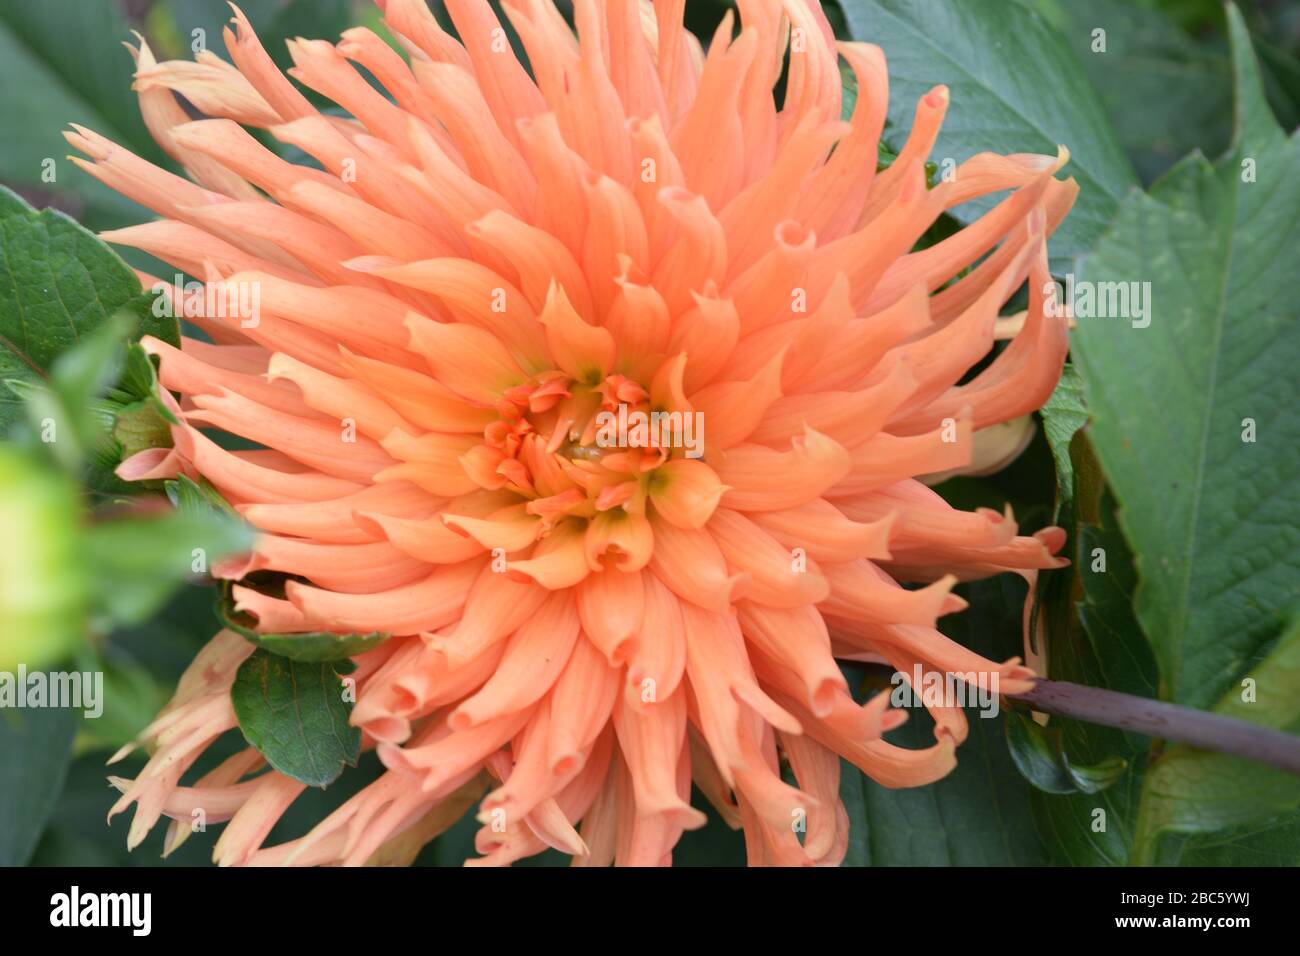 Dahlia. Name. Ludwig Helfert. Close up of a large flower with orange spiky petals. Stock Photo